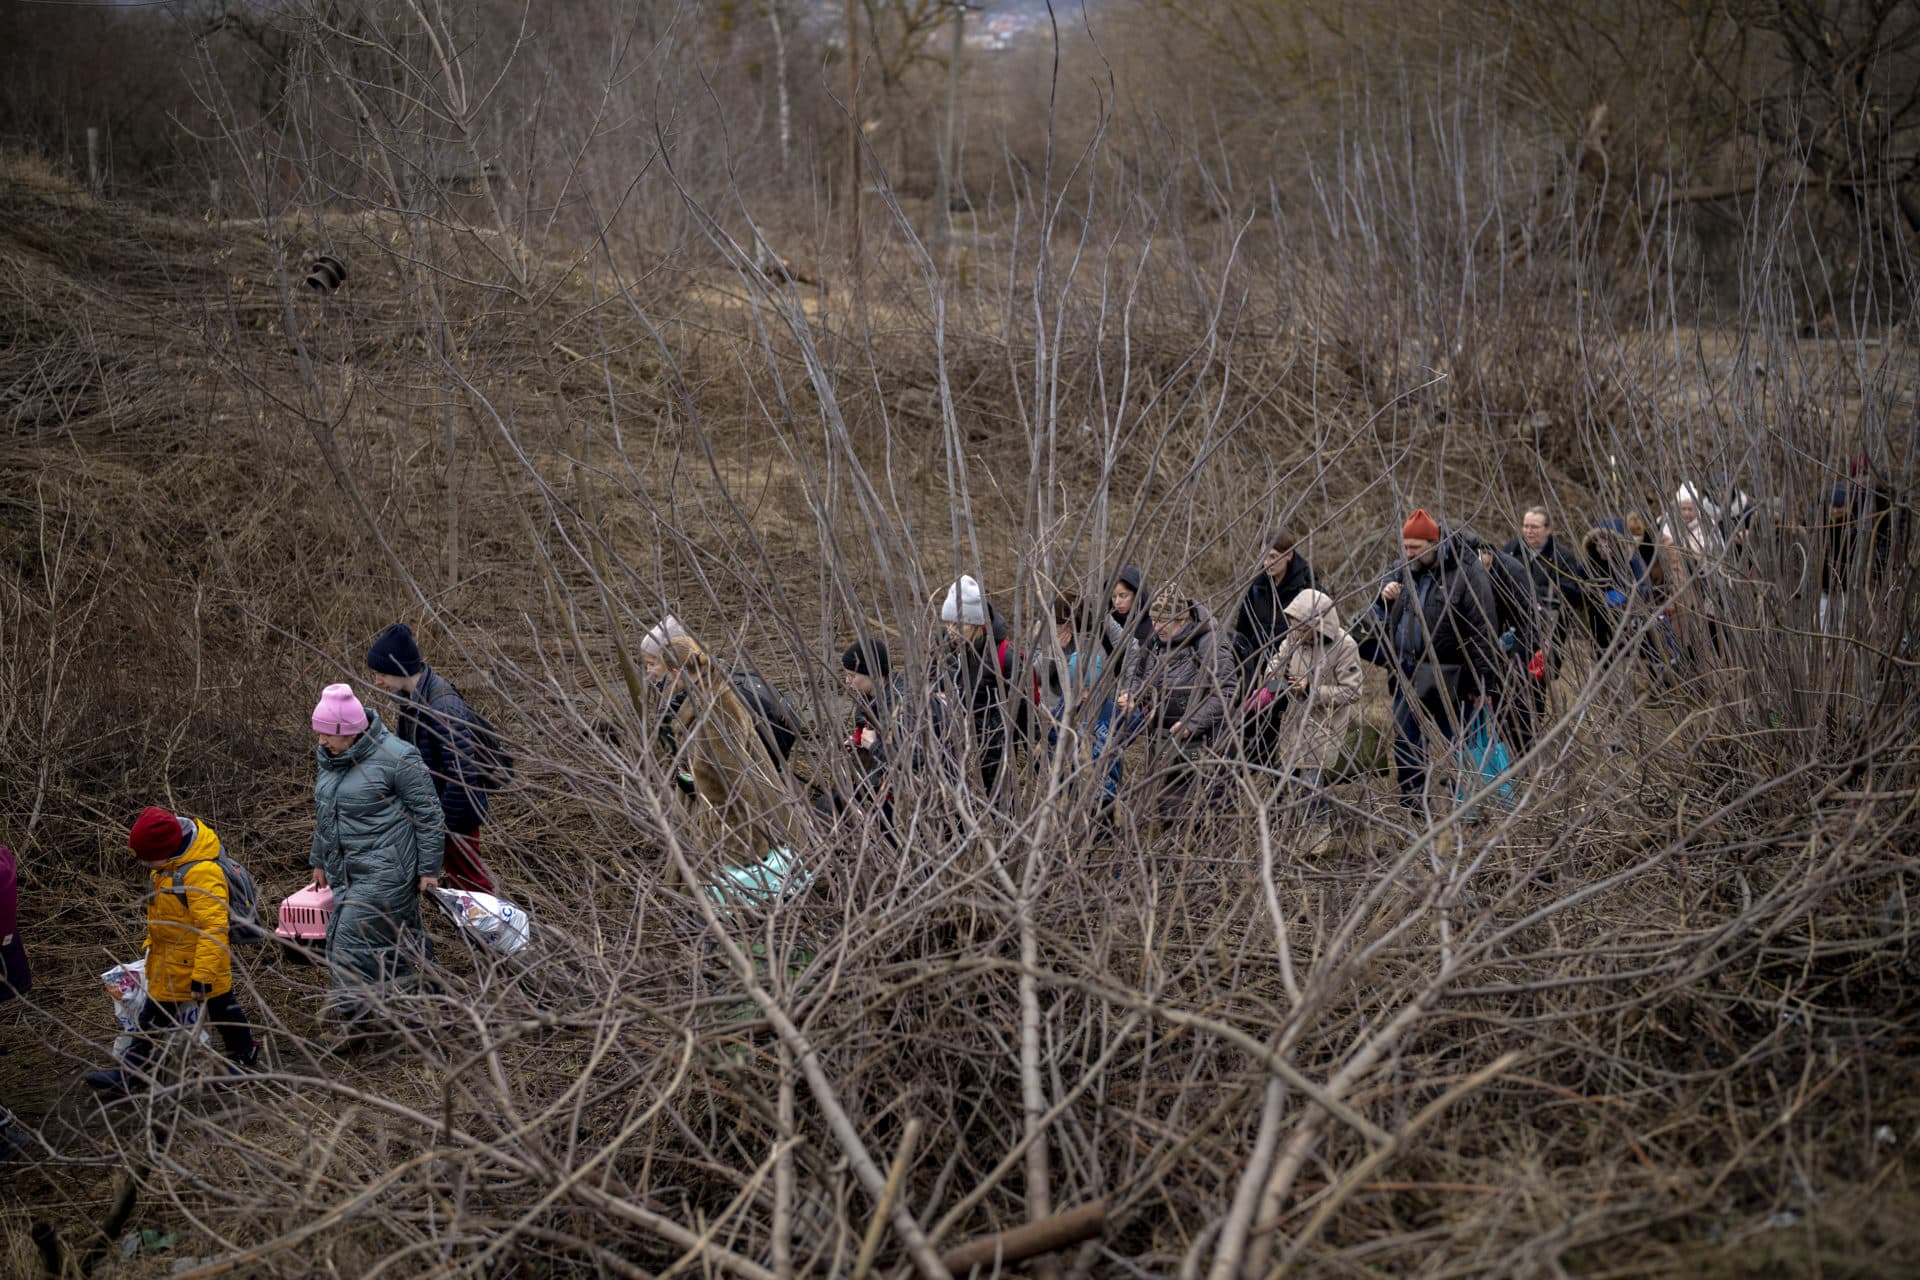 Ukrainian citizens flee crossing the Irpin river in the outskirts of Kyiv, Ukraine on Saturday, March 5. (Emilio Morenatti/AP)